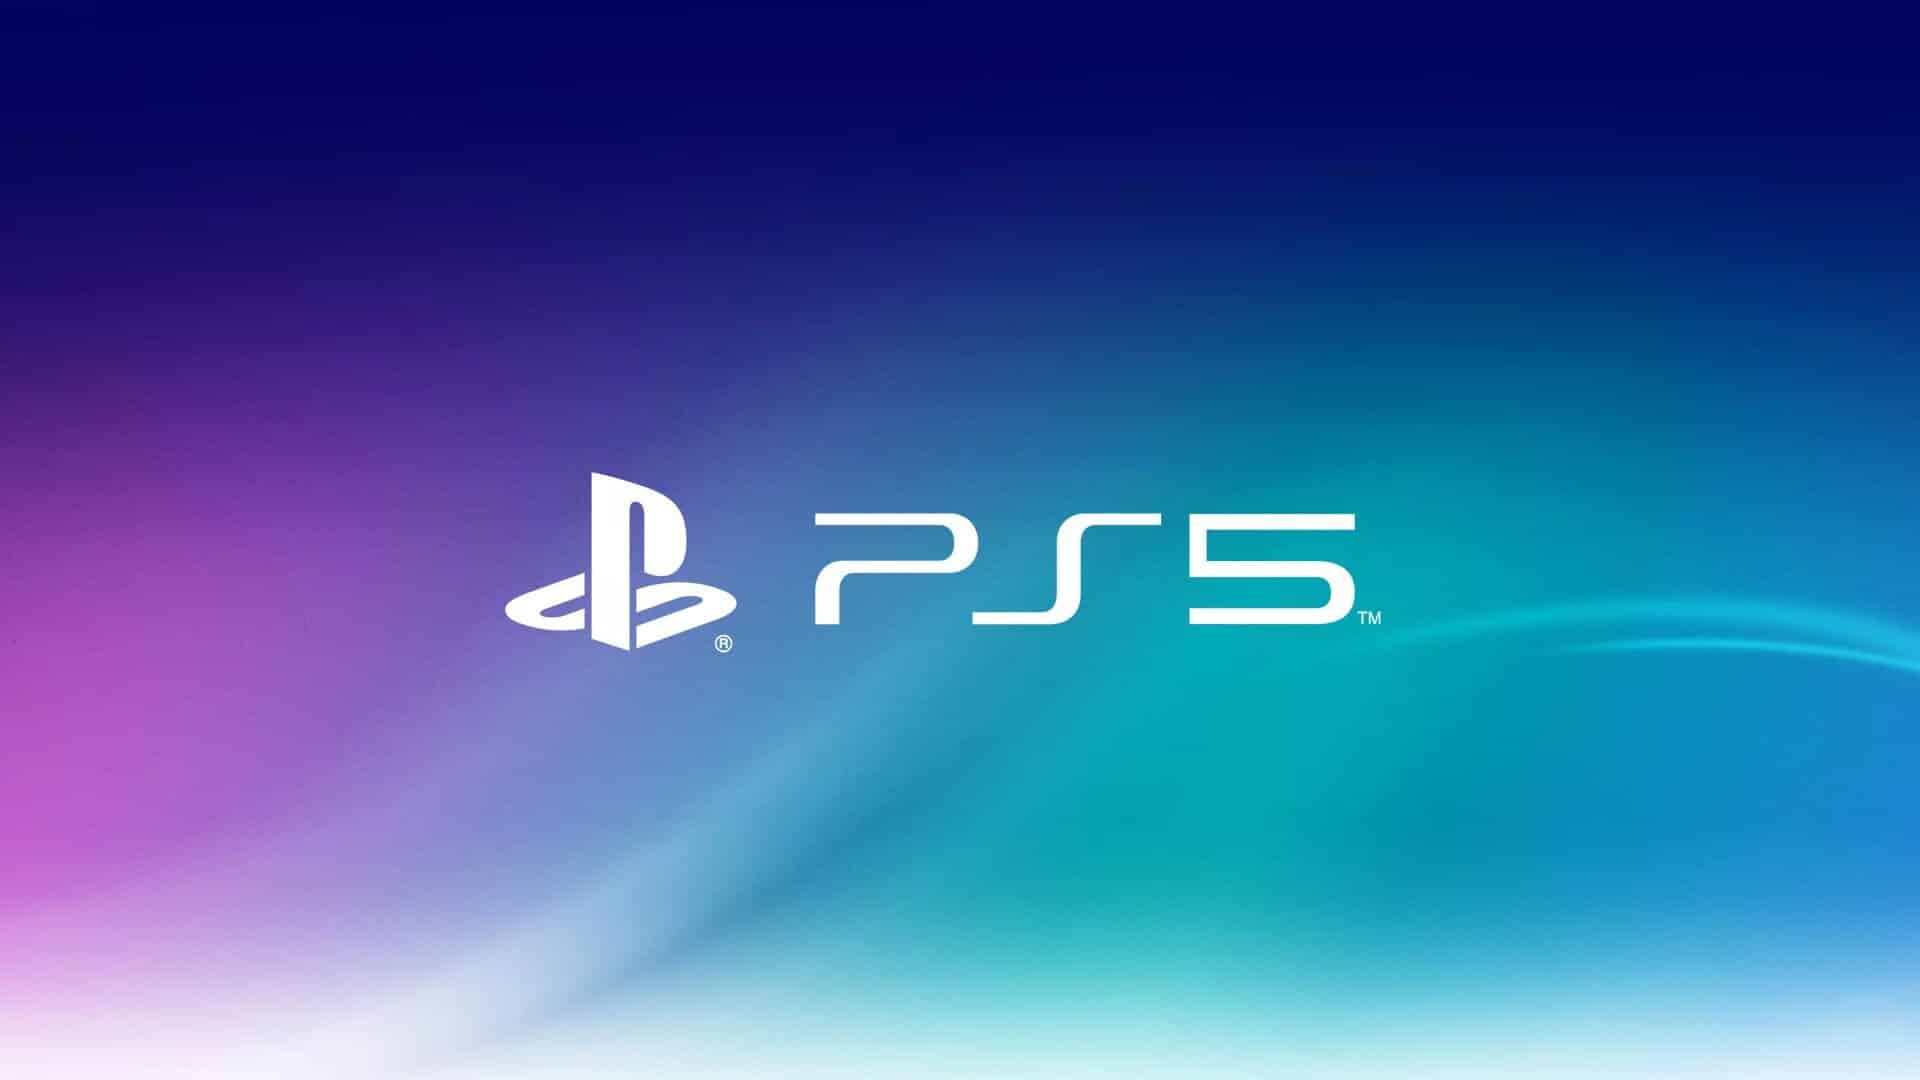 Ps5 logo